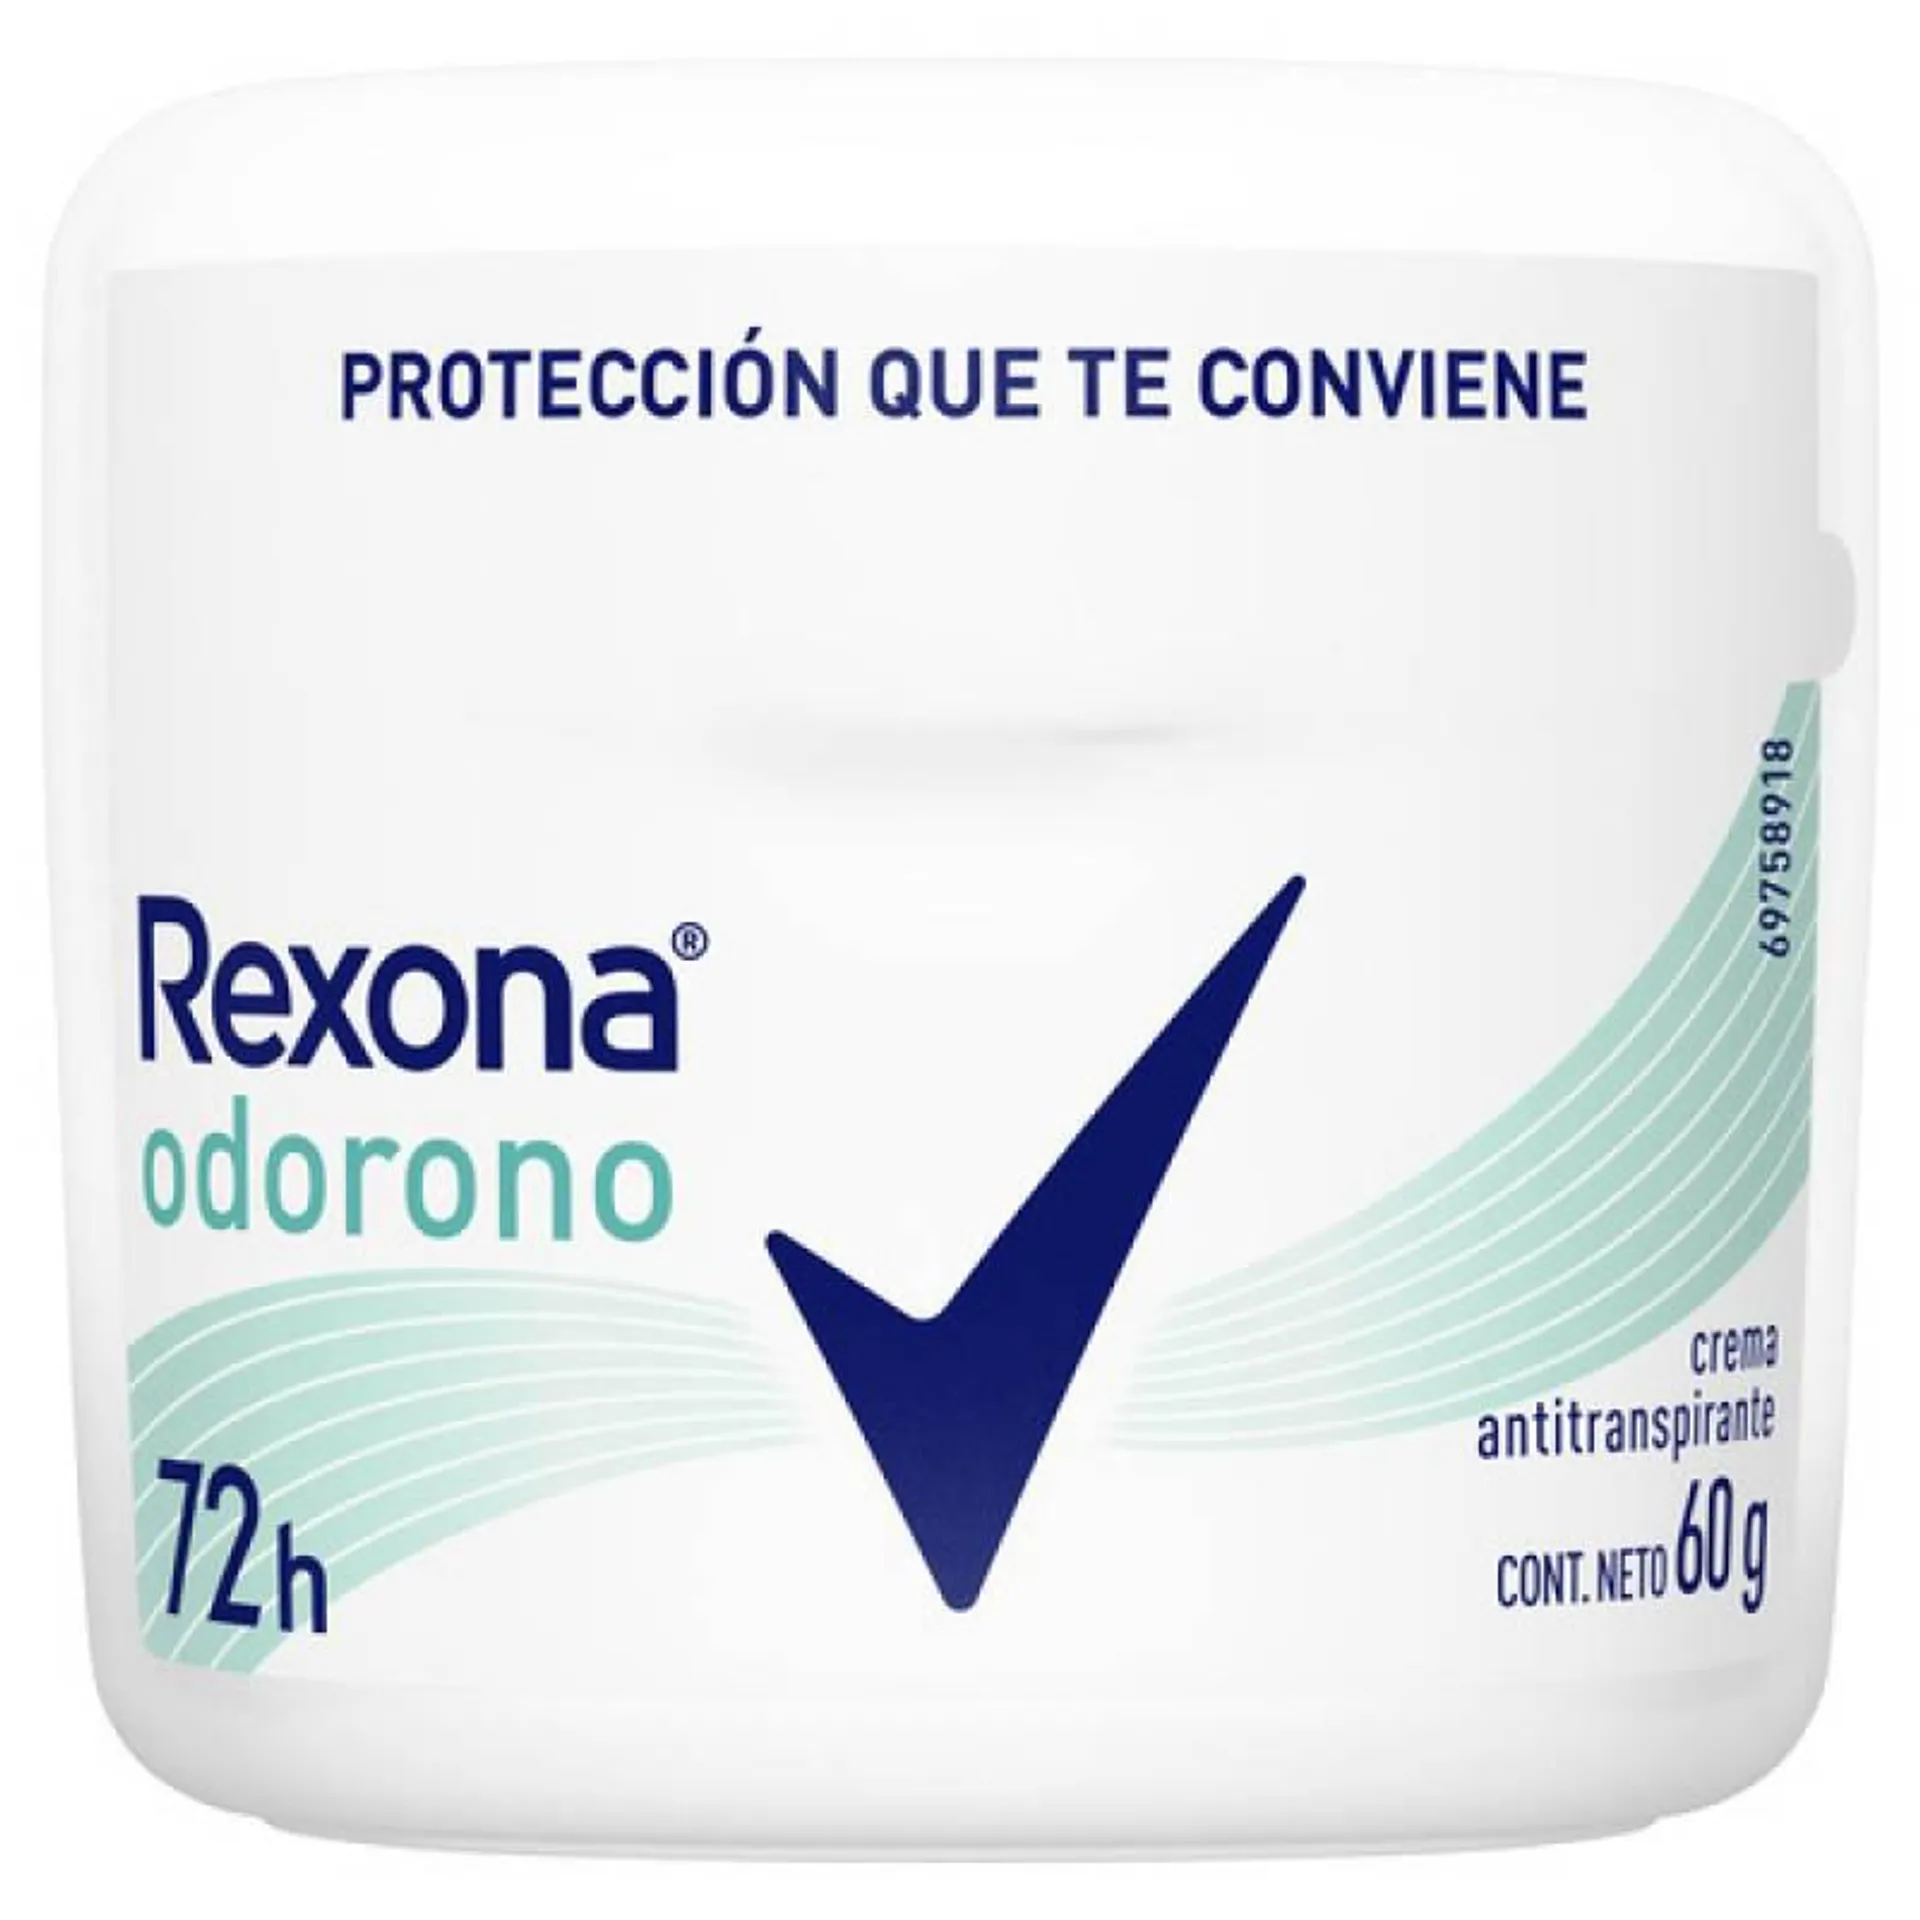 Antitranspirante Crema Odorono Rexona x 60 g.